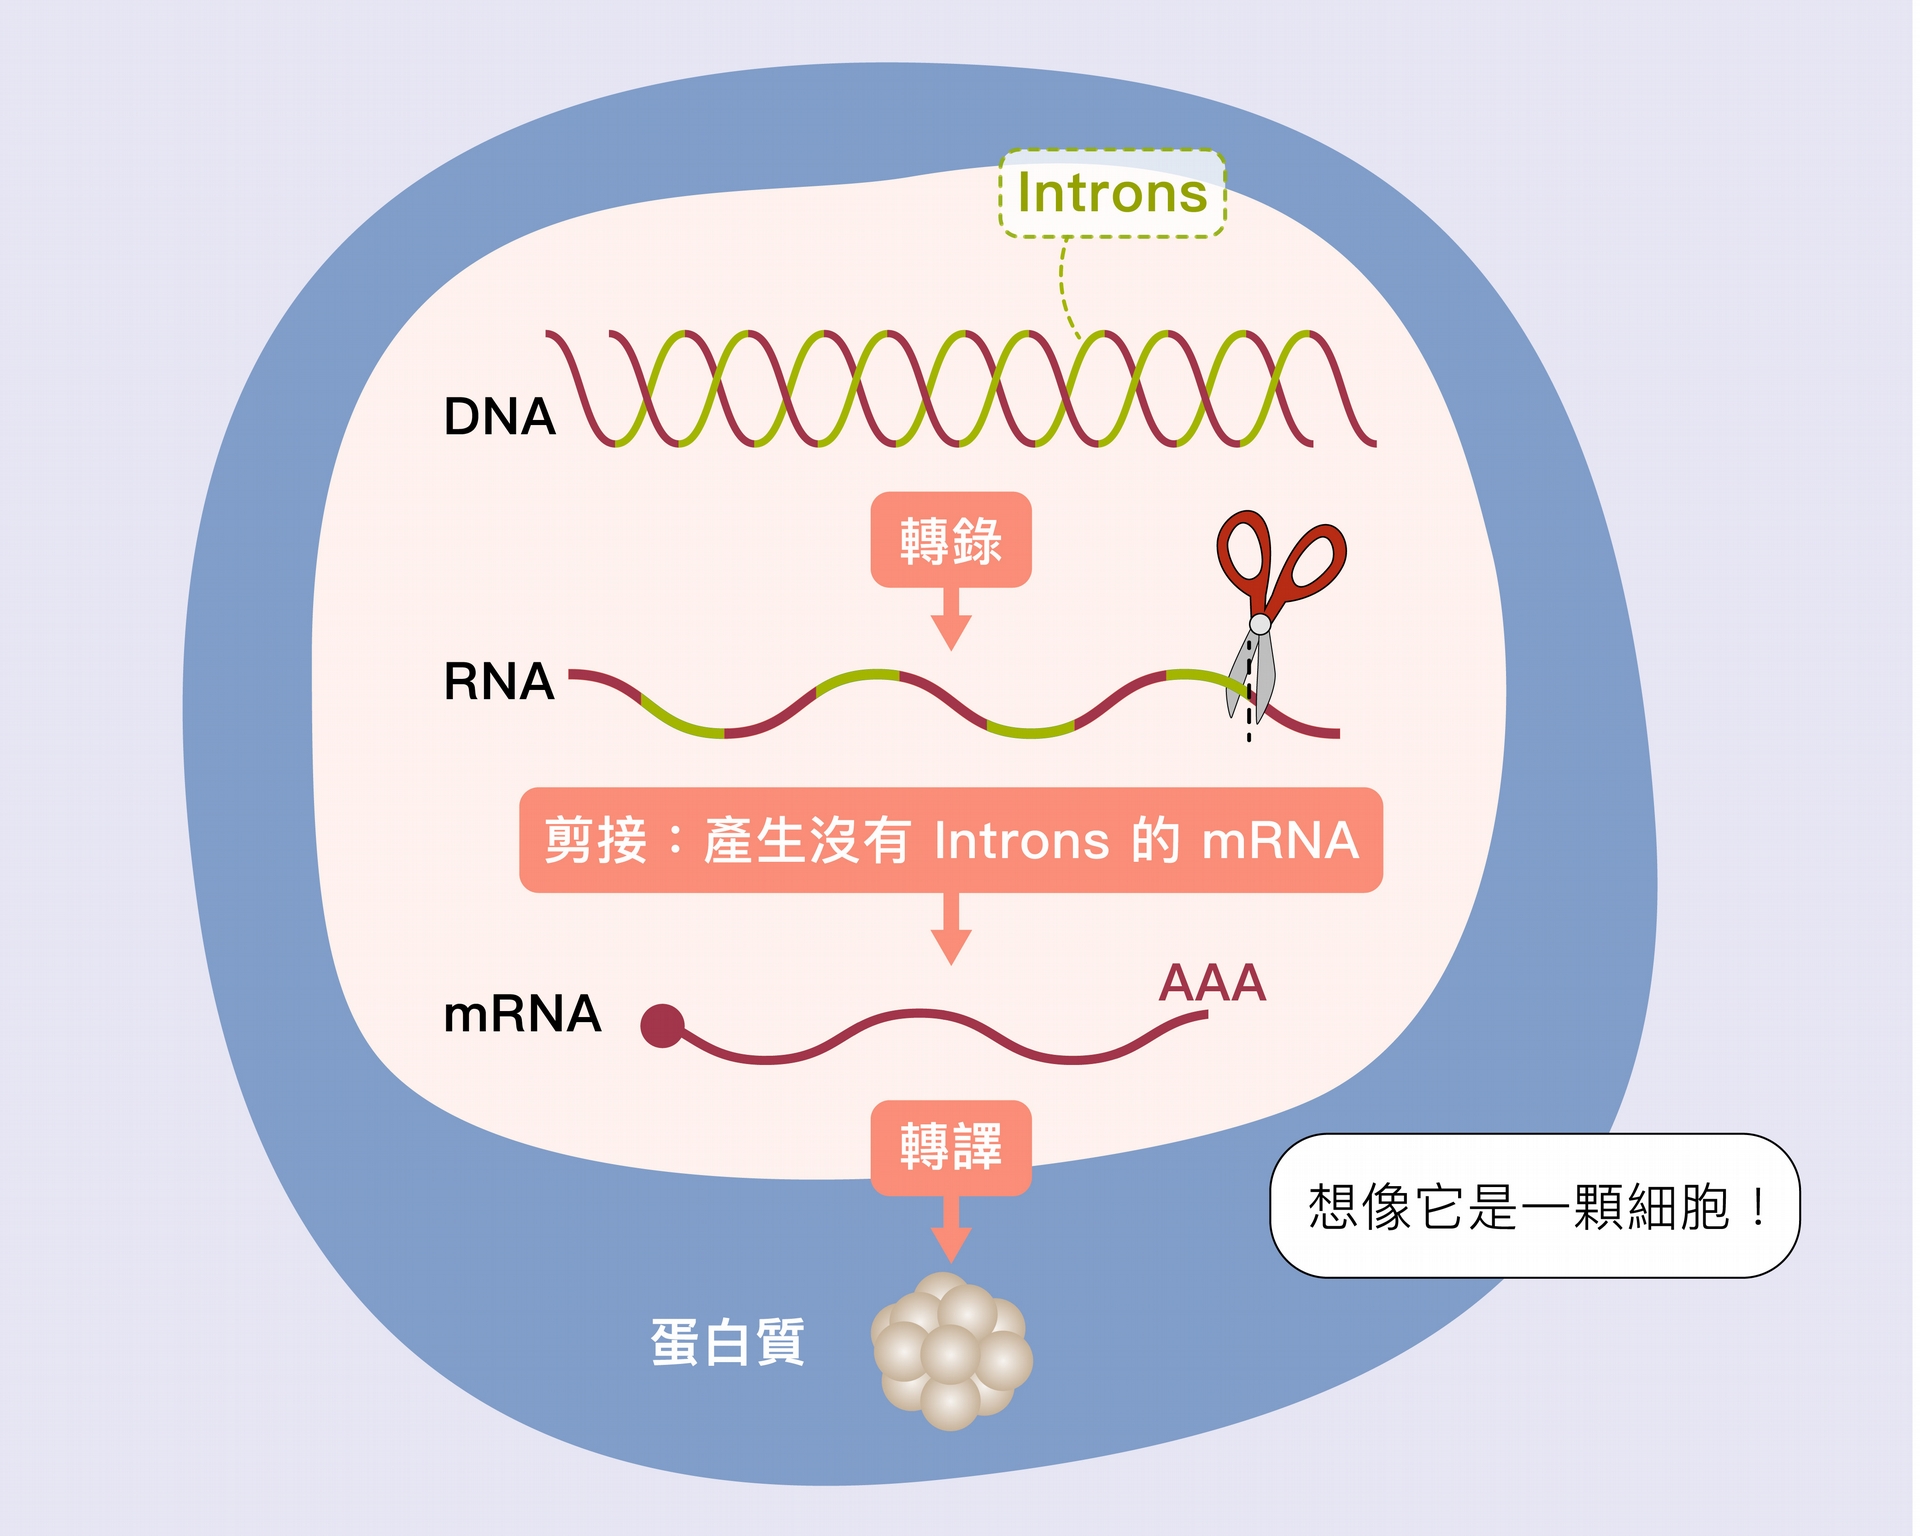 DNA 基因不是呈連續性的，中間穿插一些不需要的片段稱為內含子 (introns)，轉錄後的 RNA 必須剪去中間不需要的部分，把有用片段接起來，變成信使 RNA (mRNA)，細胞才能根據它製作蛋白質。 資料來源│張典顯 圖說設計│黃曉君、林洵安 